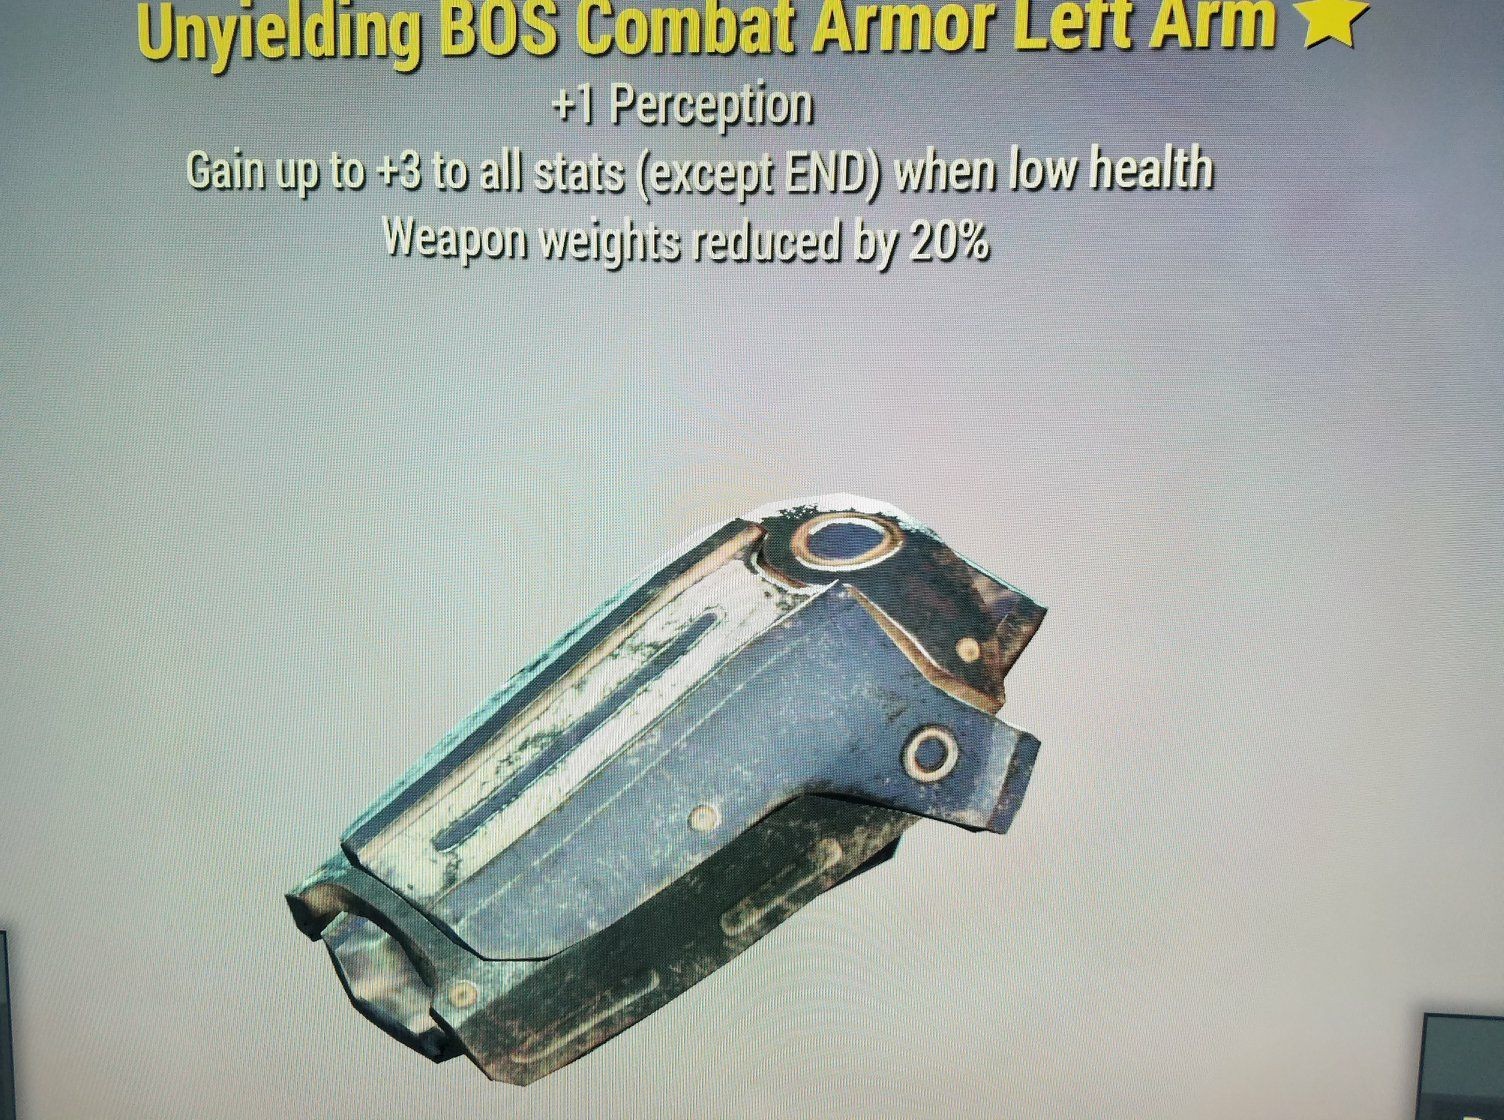 WW Reduction Unyielding BOS Combat Armor Left Arm